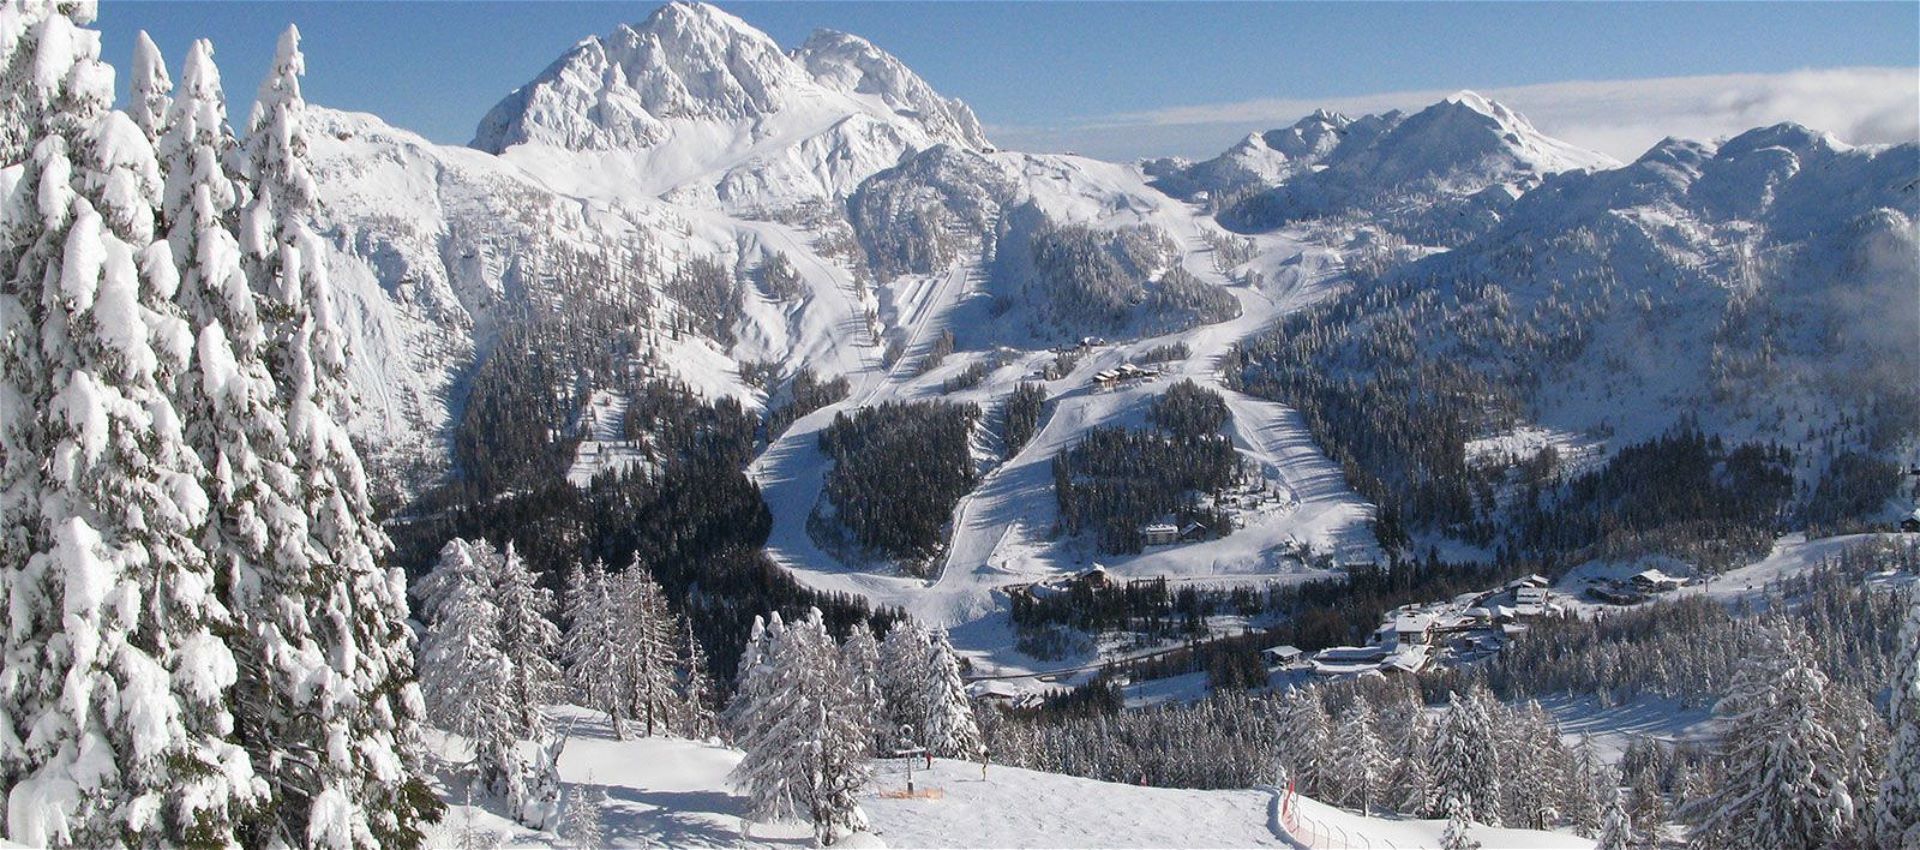 School ski trip  - February 2020